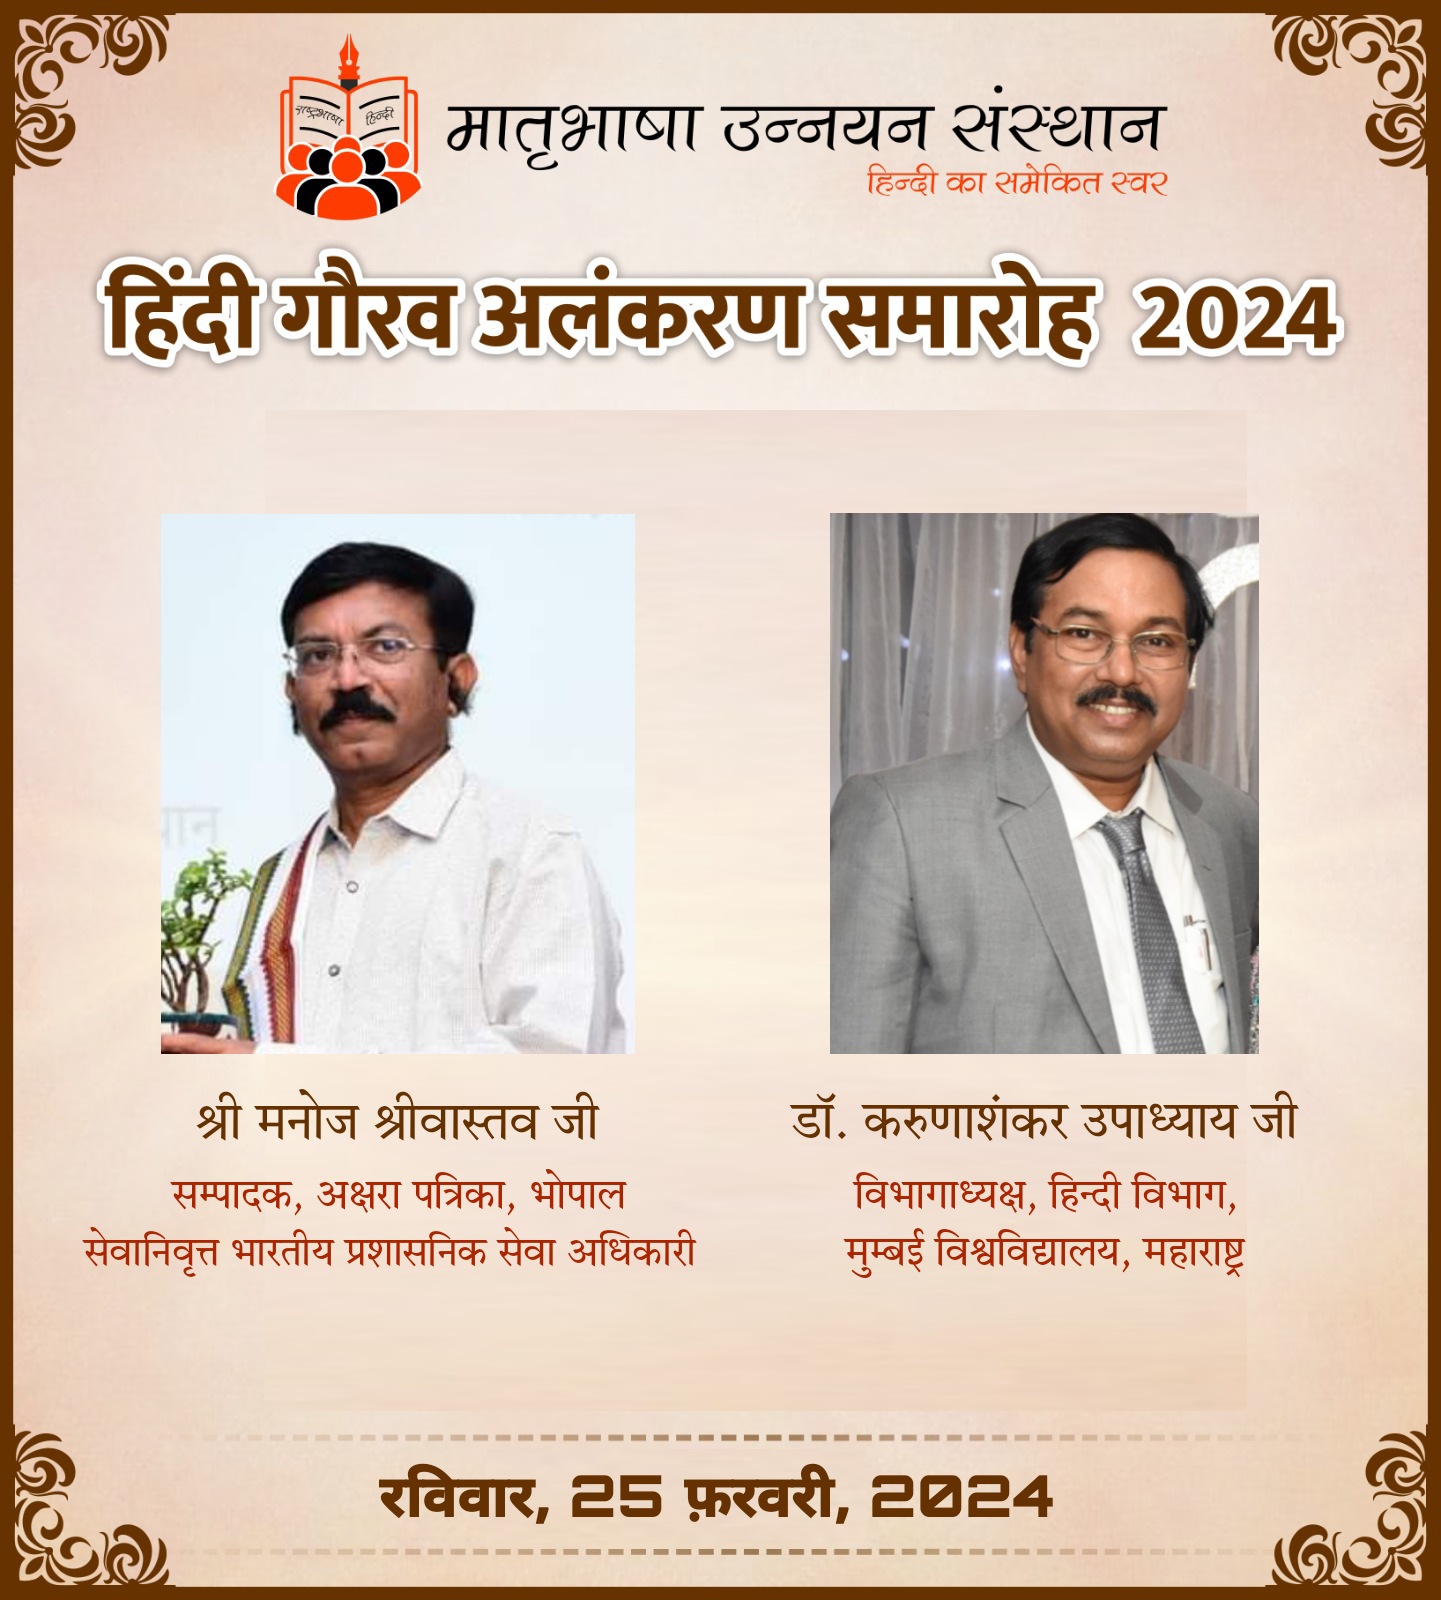 मनोज श्रीवास्तव व डॉ. करुणाशंकर उपाध्याय को मिलेगा वर्ष 2024 का हिन्दी गौरव अलंकरण